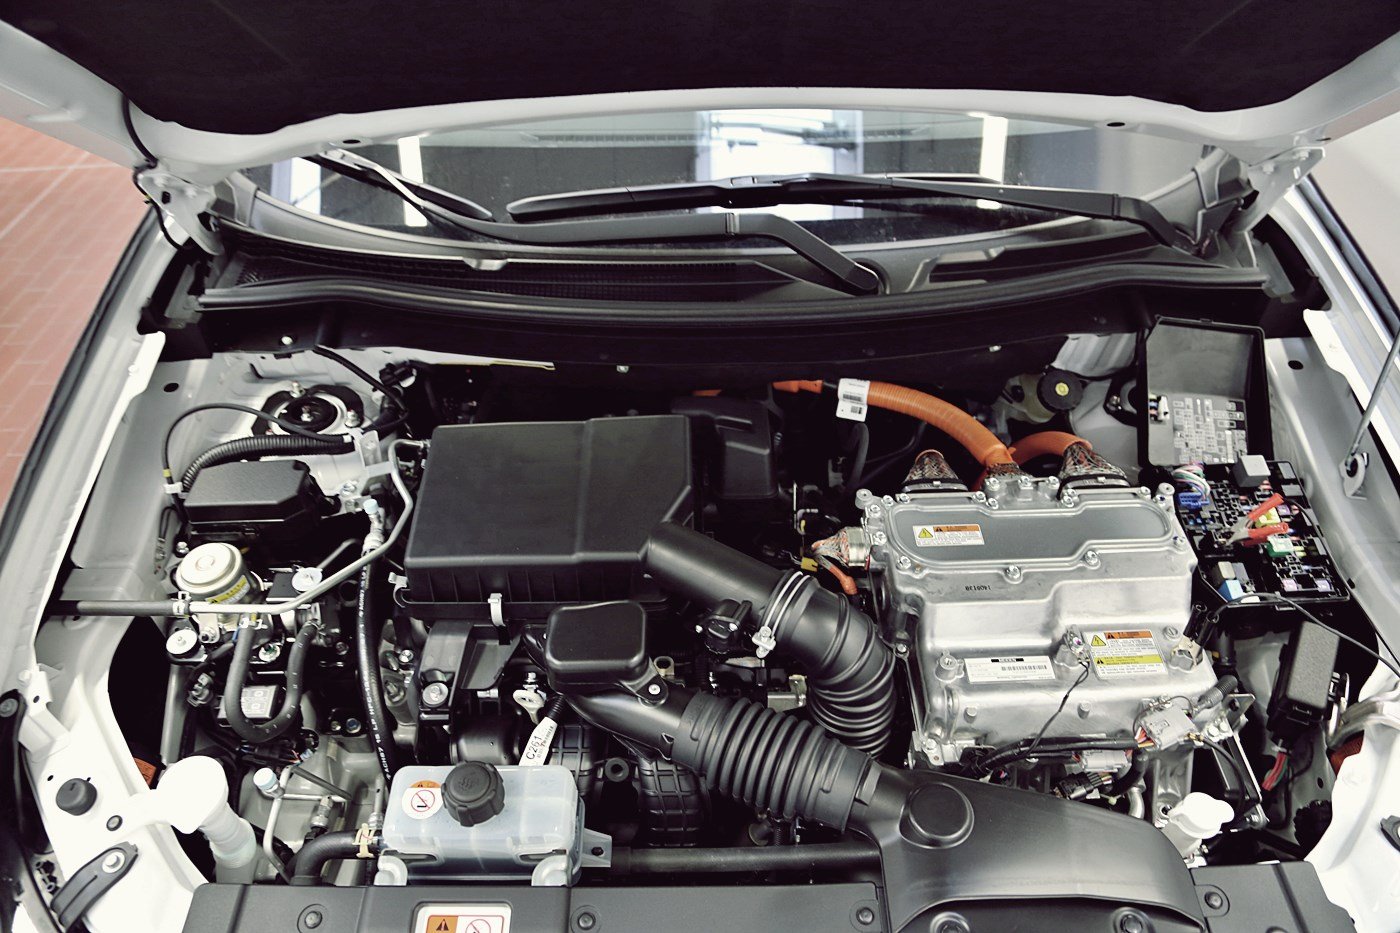 Мицубиси аутлендер двигатель 2. Подкапотное пространство Митсубиси Аутлендер 3. Митсубиси Аутлендер под капотом. Митсубиси Аутлендер подкапотка. Mitsubishi Outlander PHEV мотор.